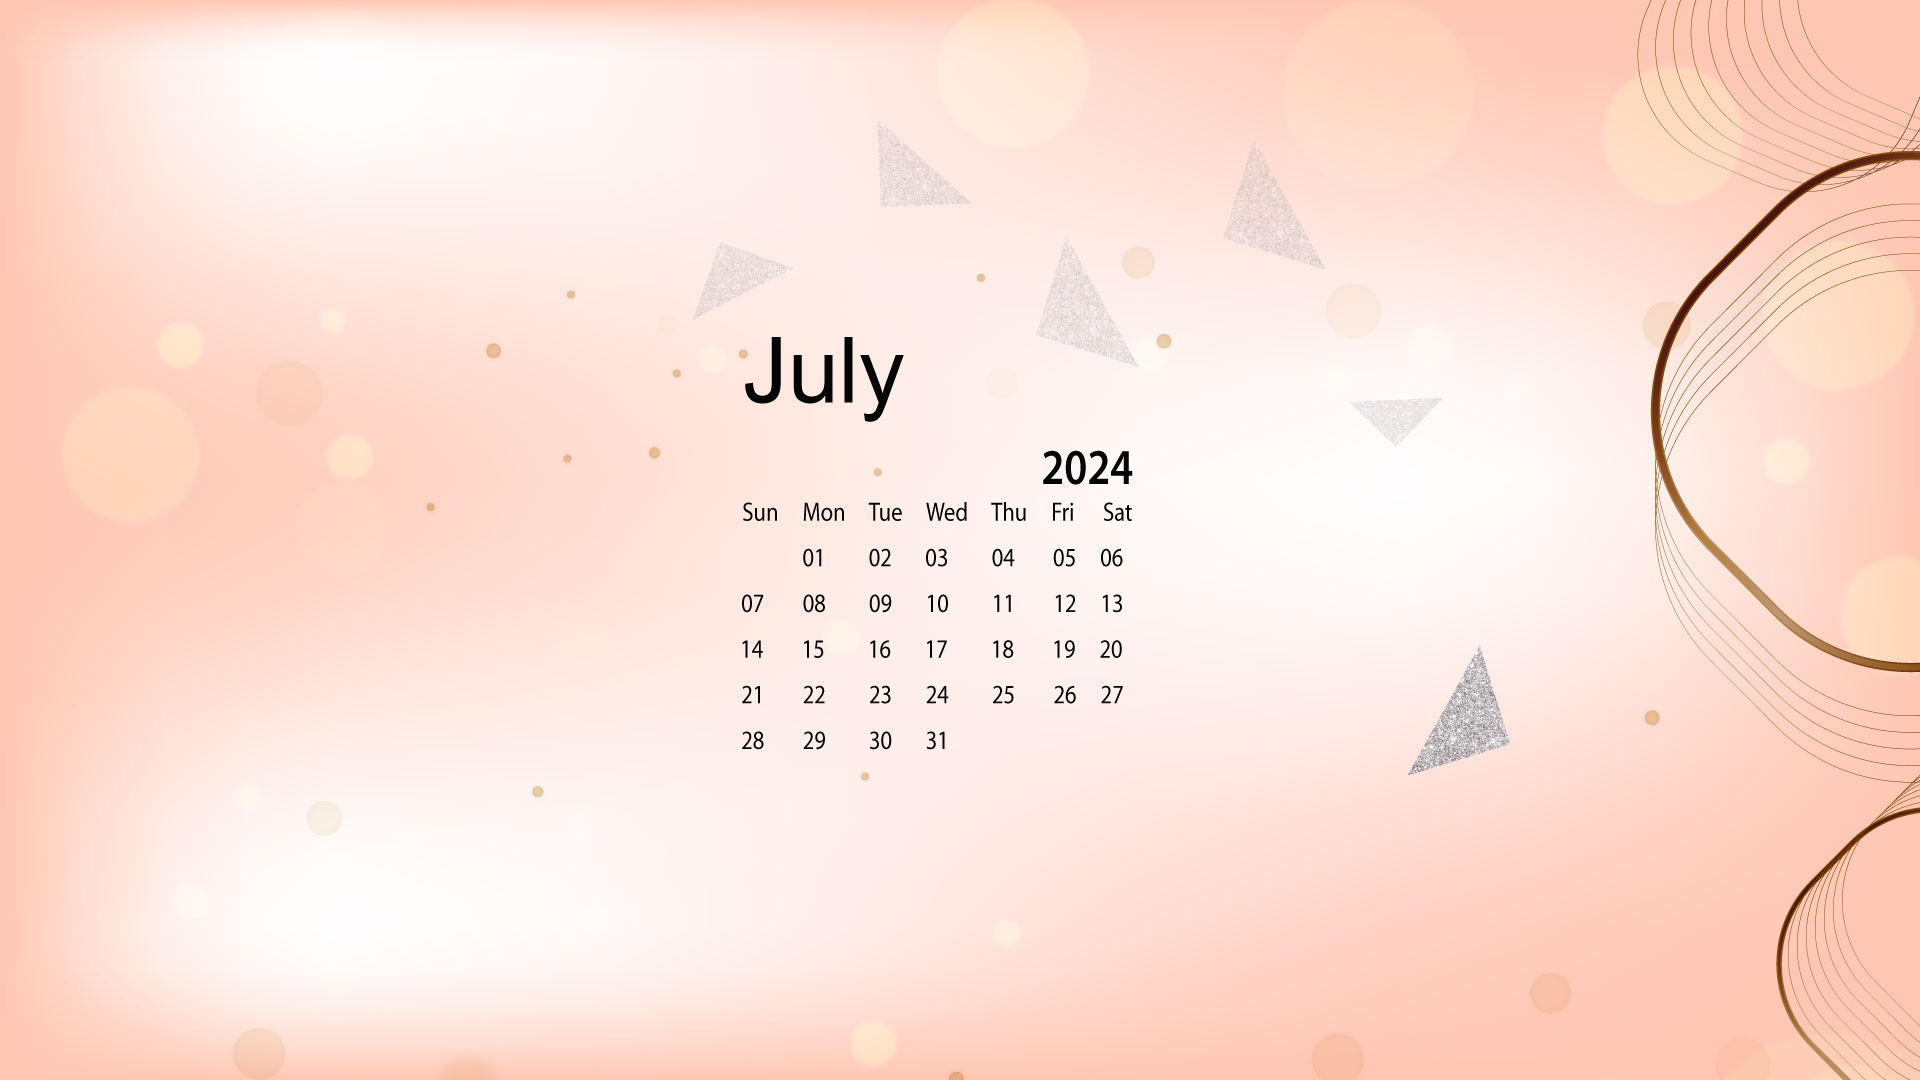 July 2024 Desktop Wallpaper Calendar - Calendarlabs intended for July Wallpaper Calendar 2024